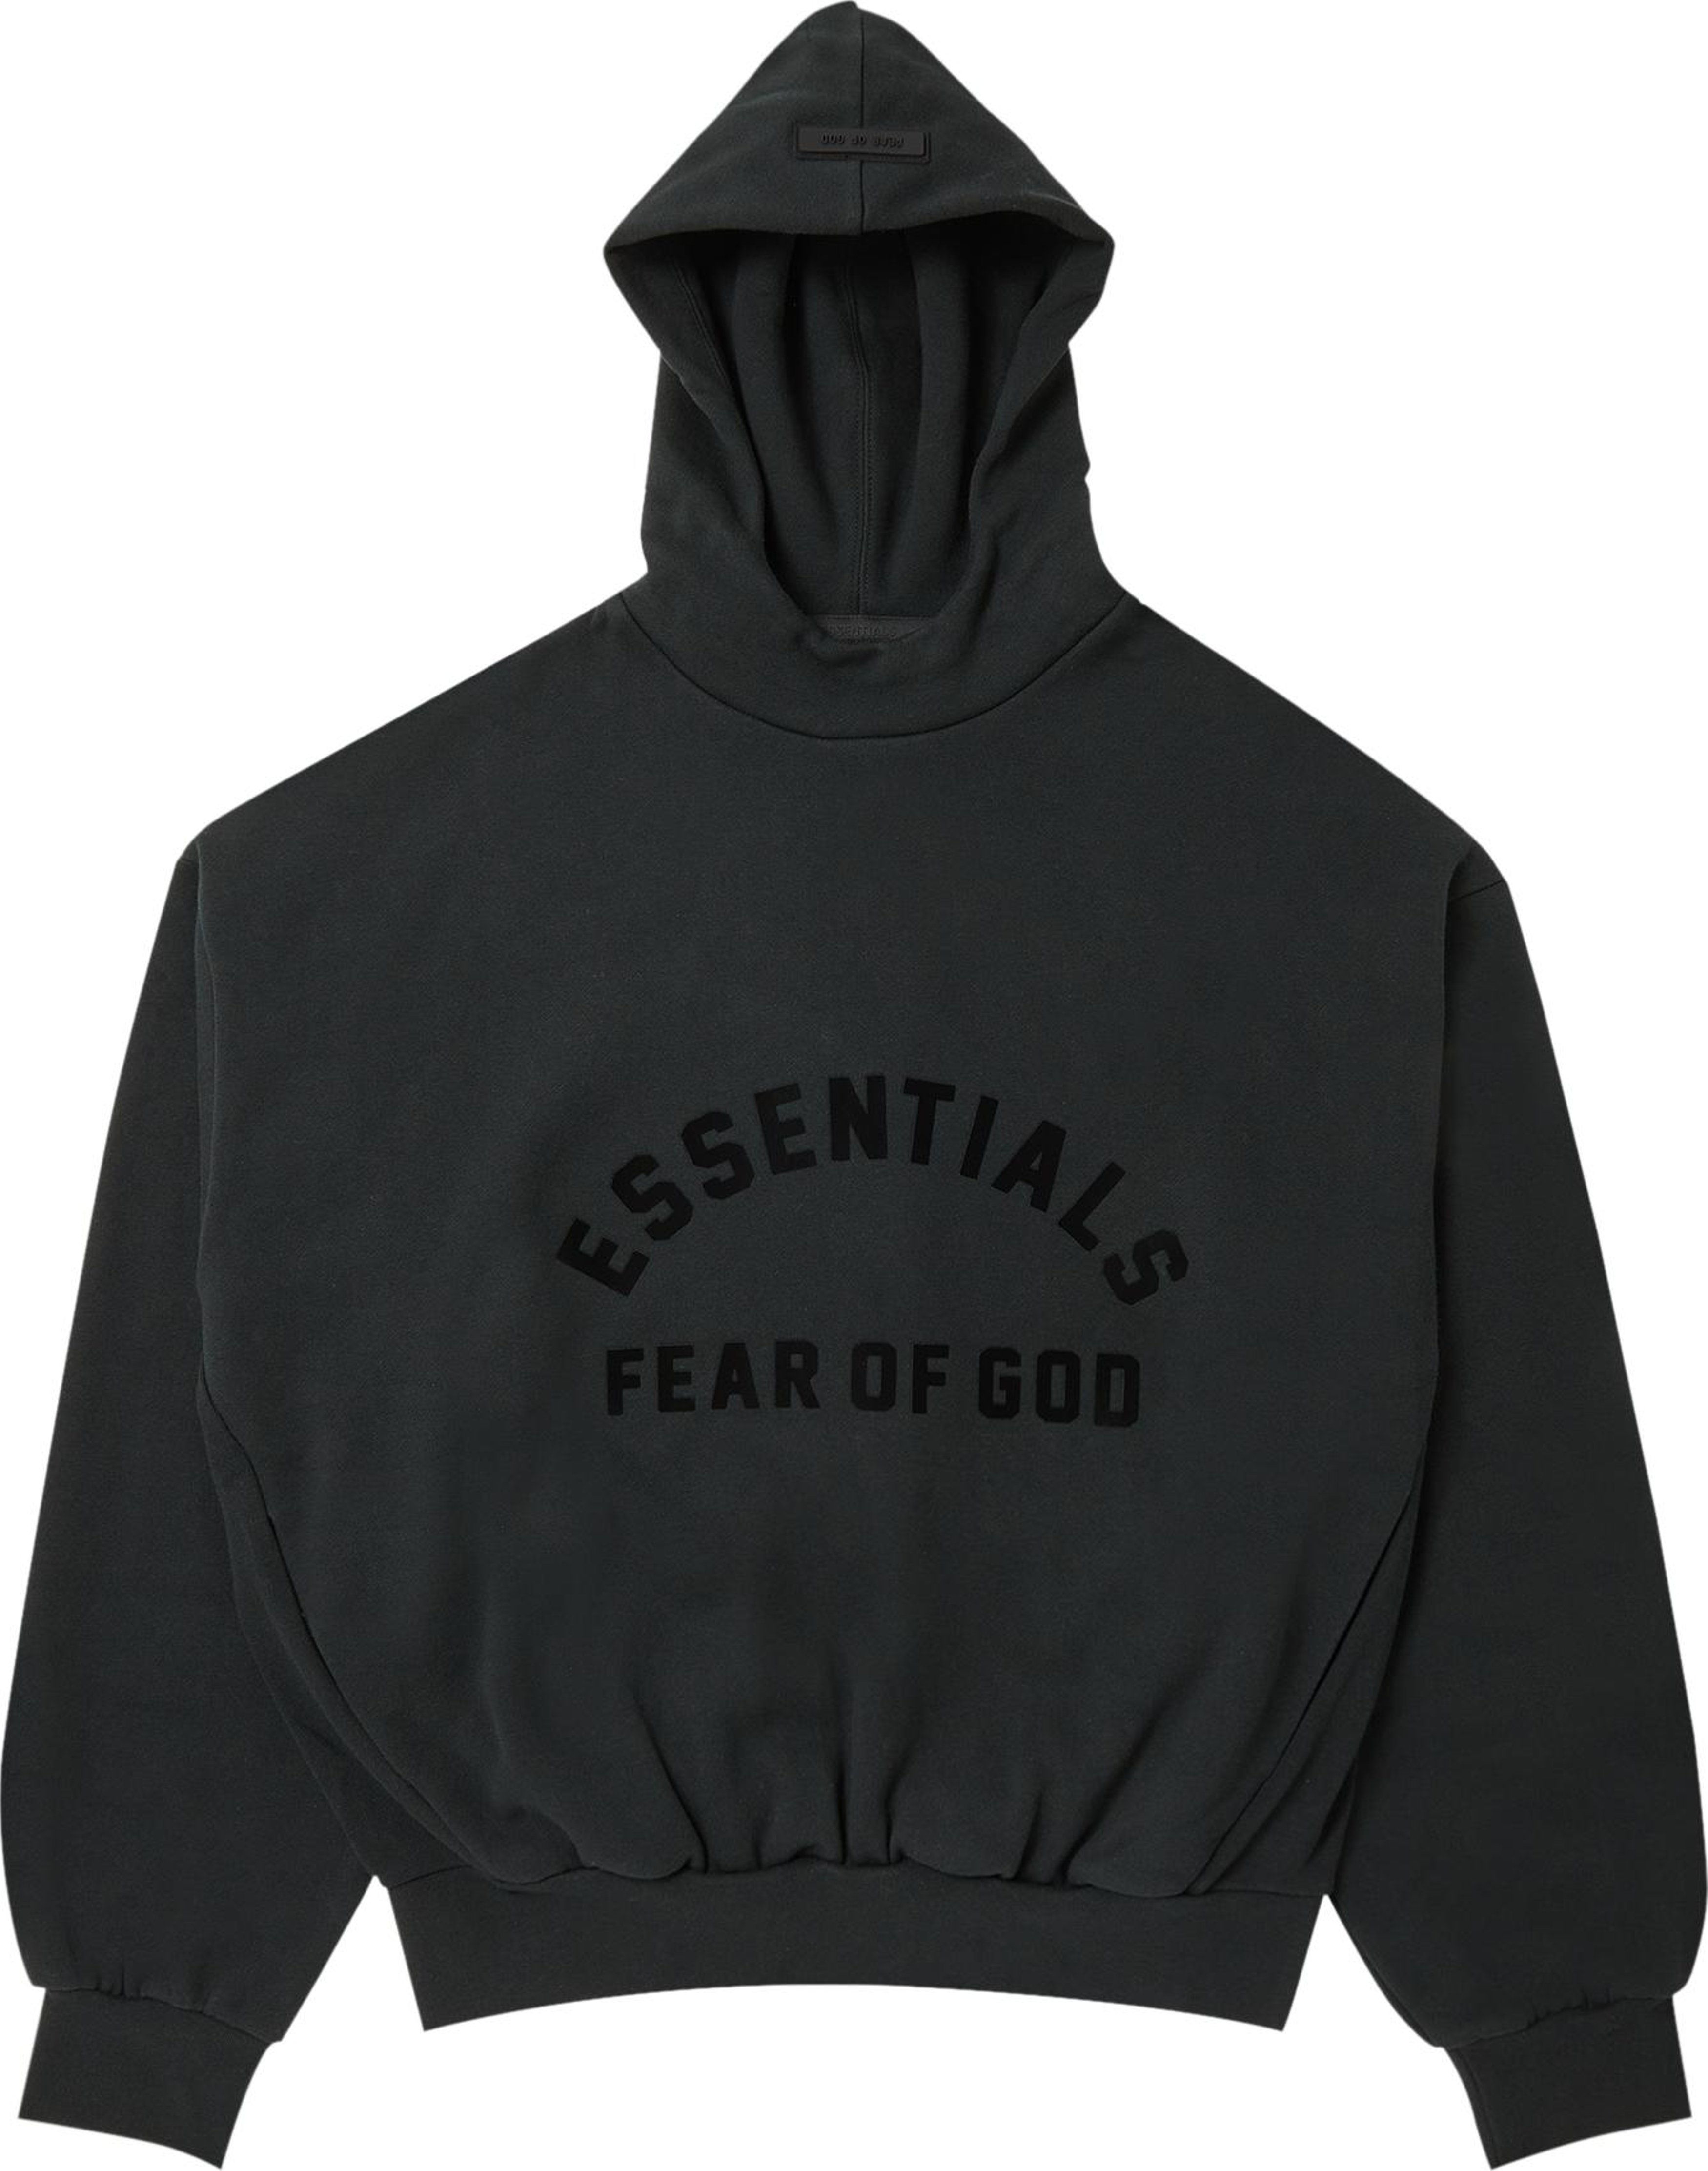 Buy Fear of God Essentials Hoodie 'Jet Black' - 192SP232050F | GOAT